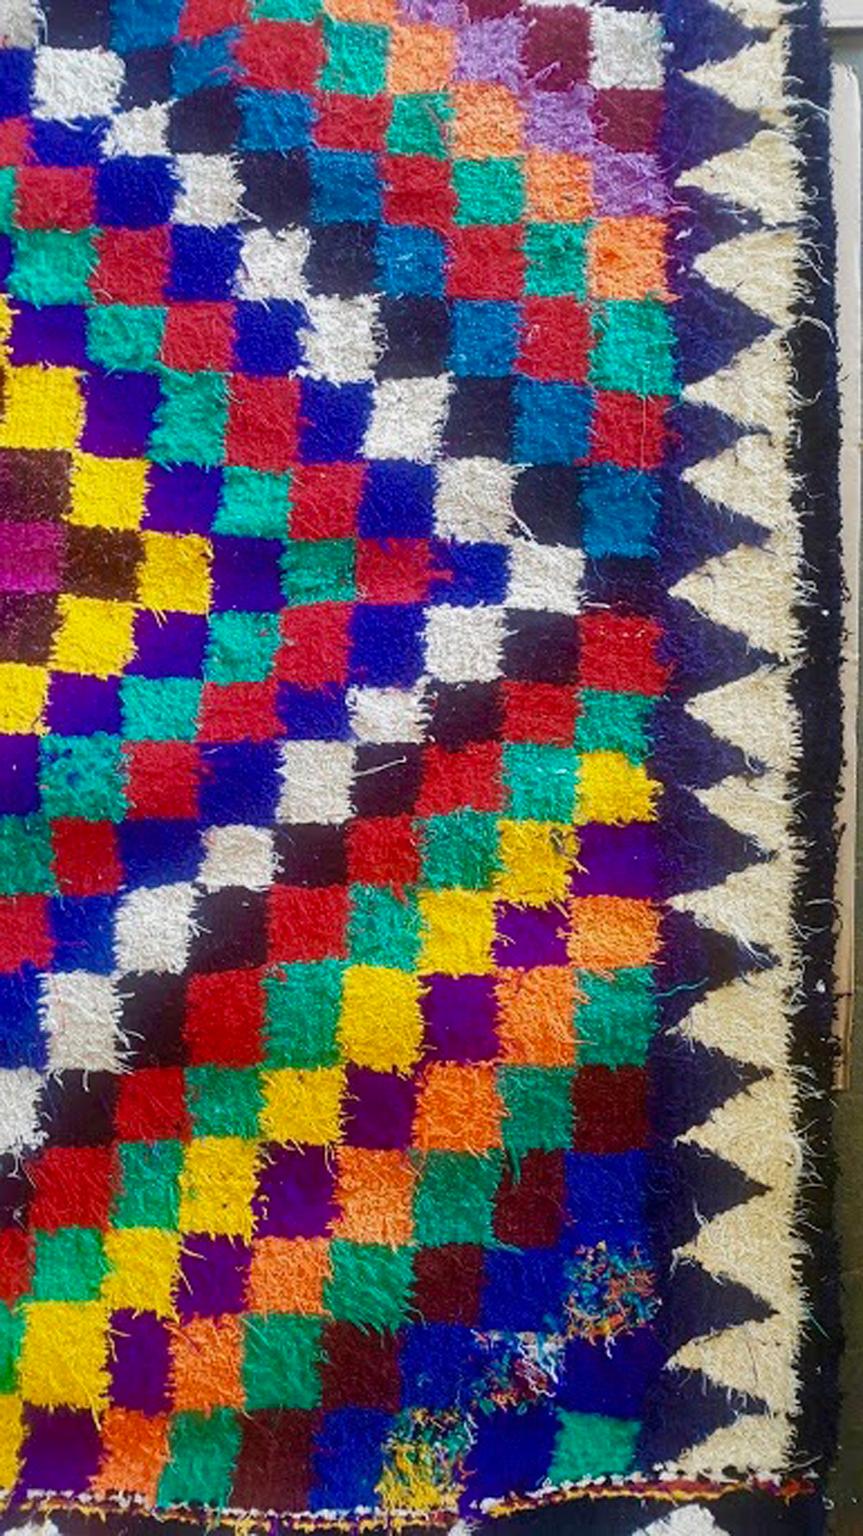 Unknown Big Colorful Vintage Carpet, Boho Style Rug, Similar to Kilim